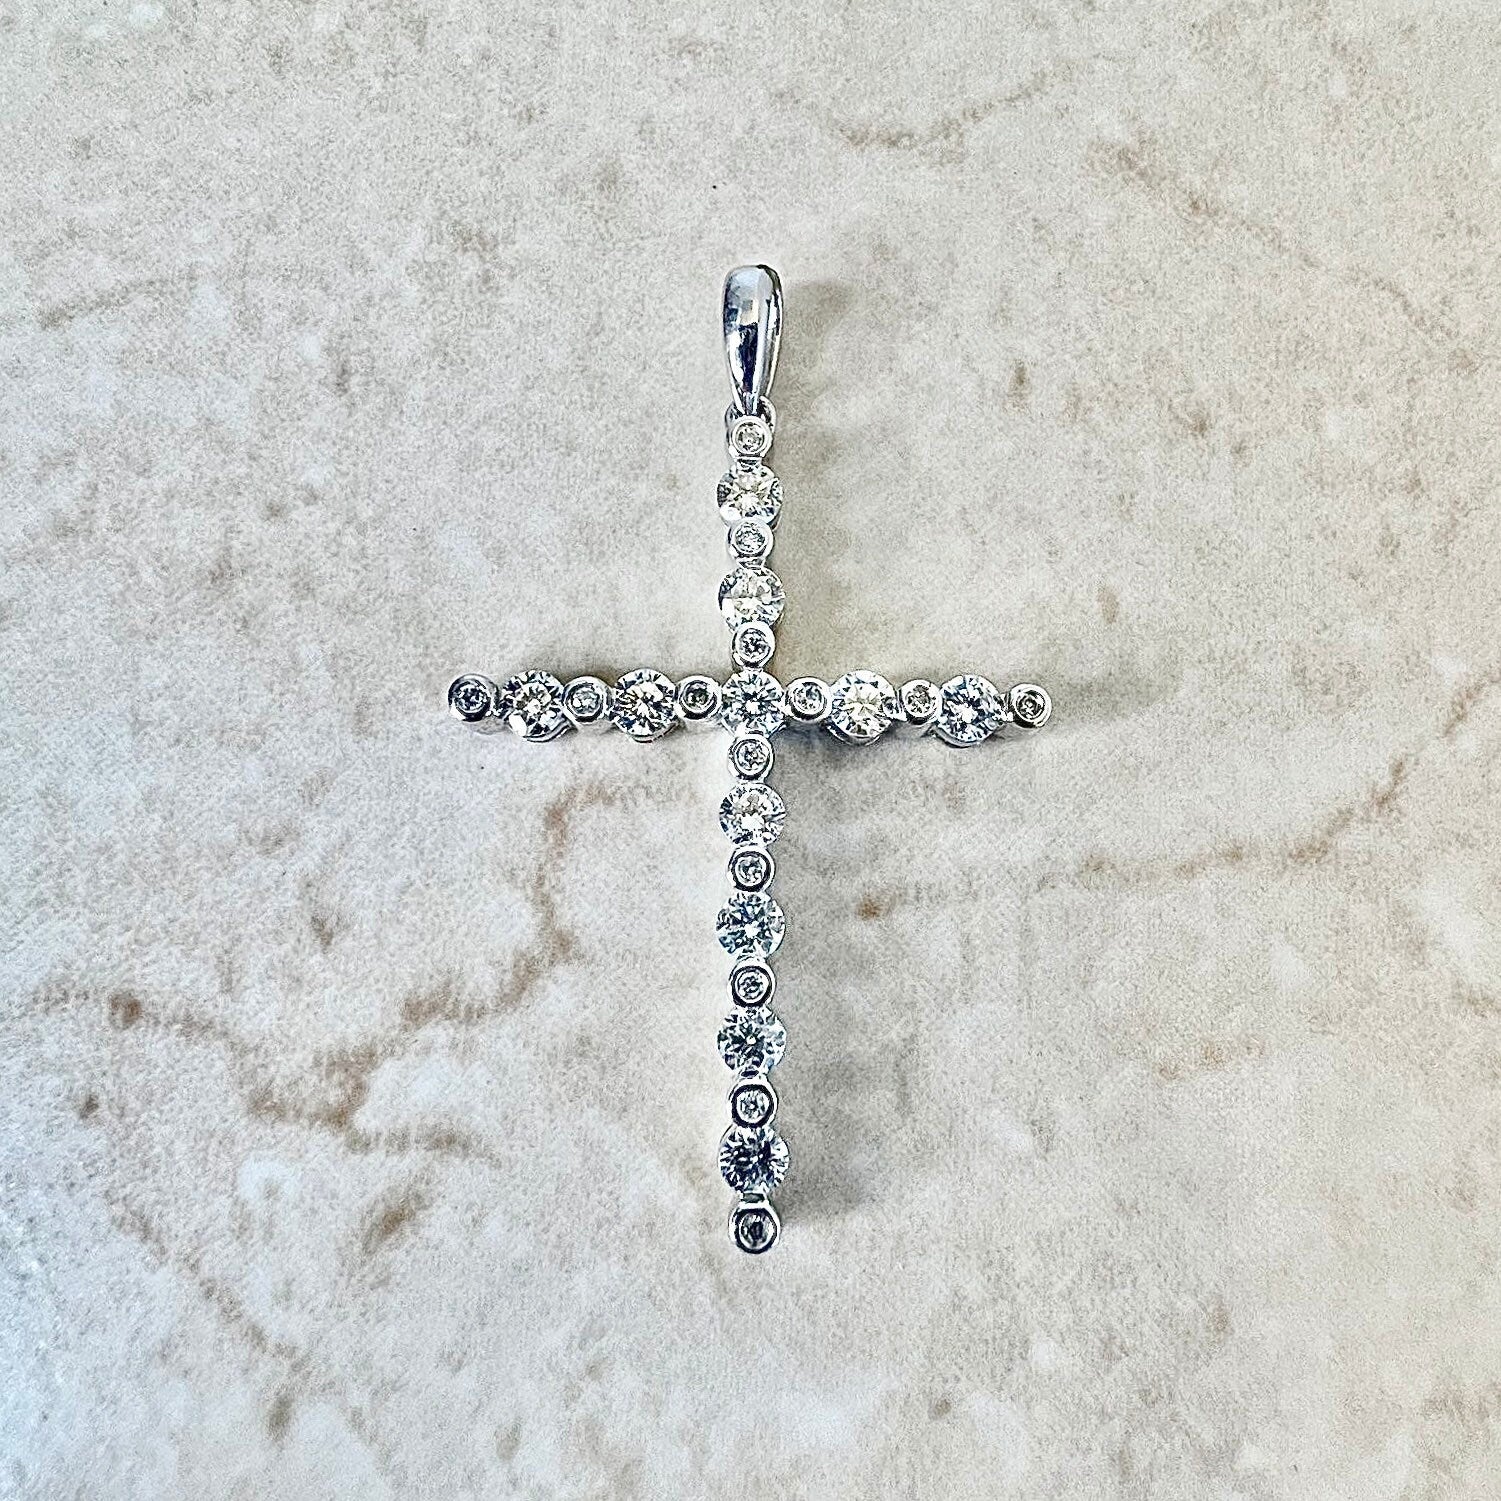 Vintage 14K Diamond Cross Pendant Necklace 1.20 CTTW - White Gold Diamond Pendant - Religious Jewelry - Birthday Gift For Her - Jewelry Sale